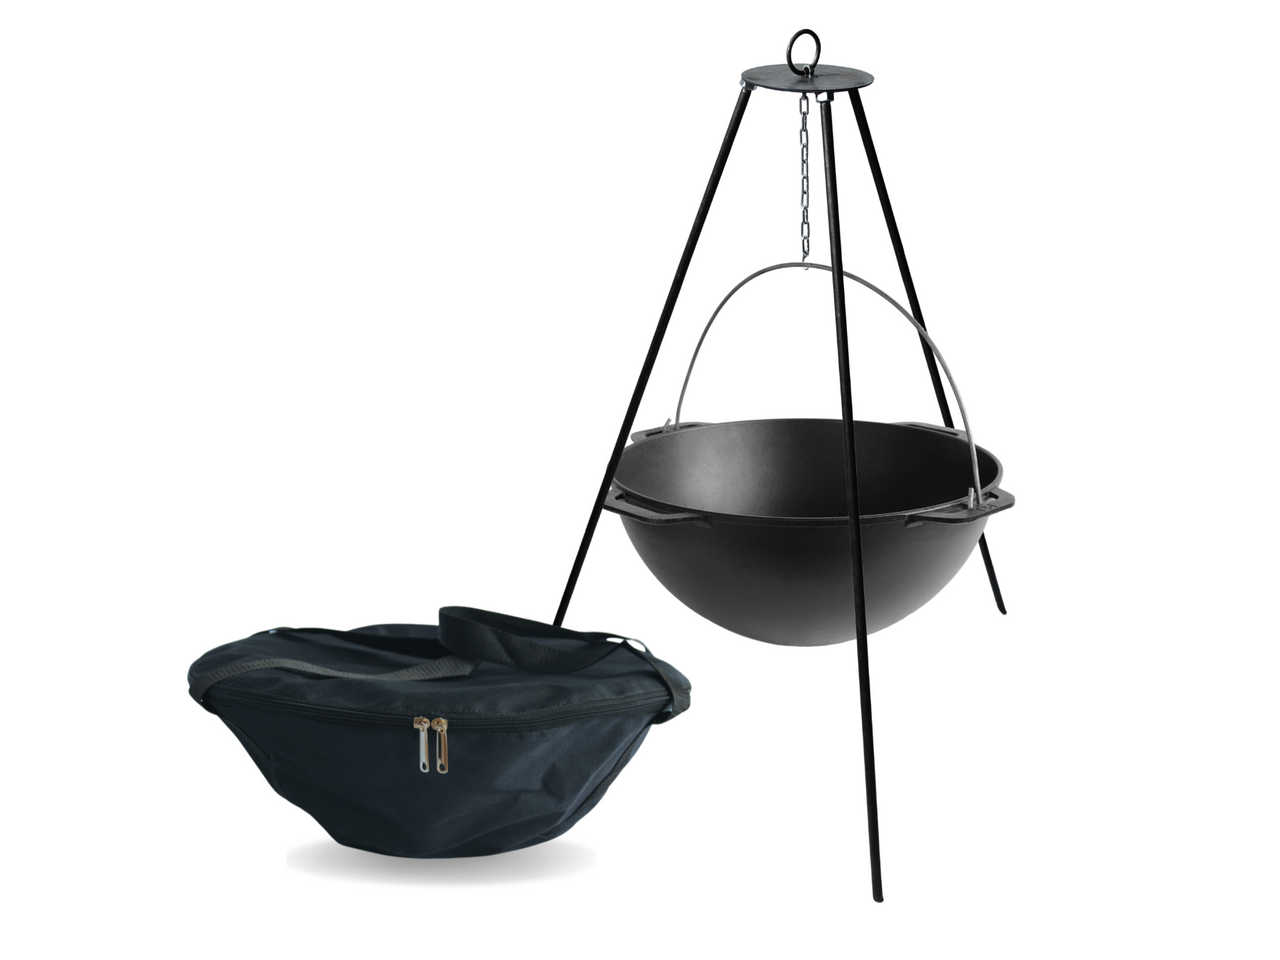 Cast iron asian cauldron 4 L with a tripod and a bag